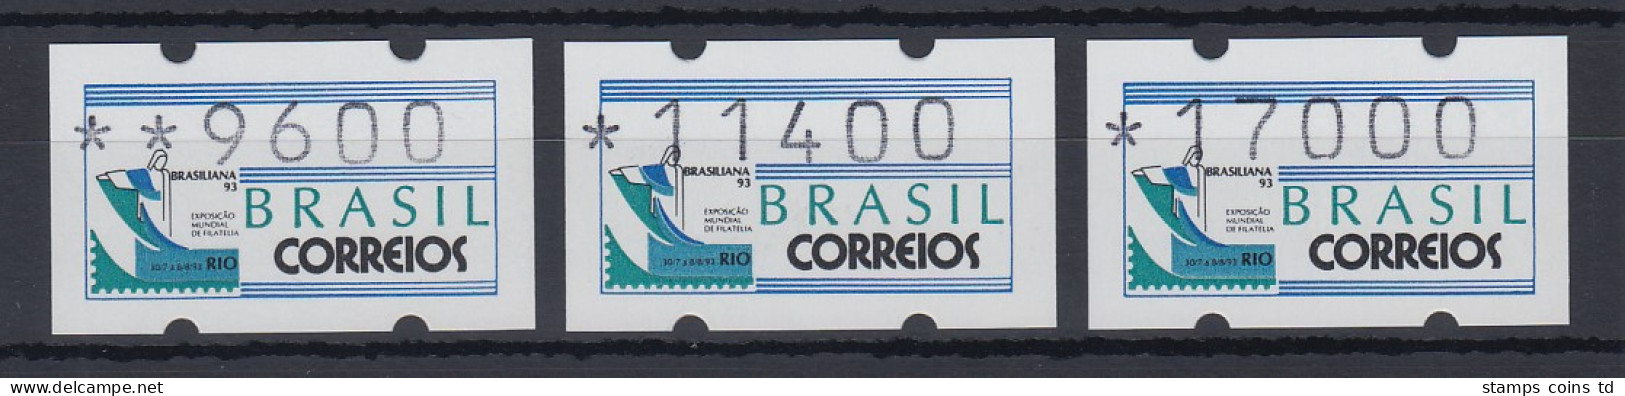 Brasilien 1993 Sonder-ATM BRASILIANA'93, Mi.-Nr. 5, Satz 9600-11400-17000 ** - Automatenmarken (Frama)